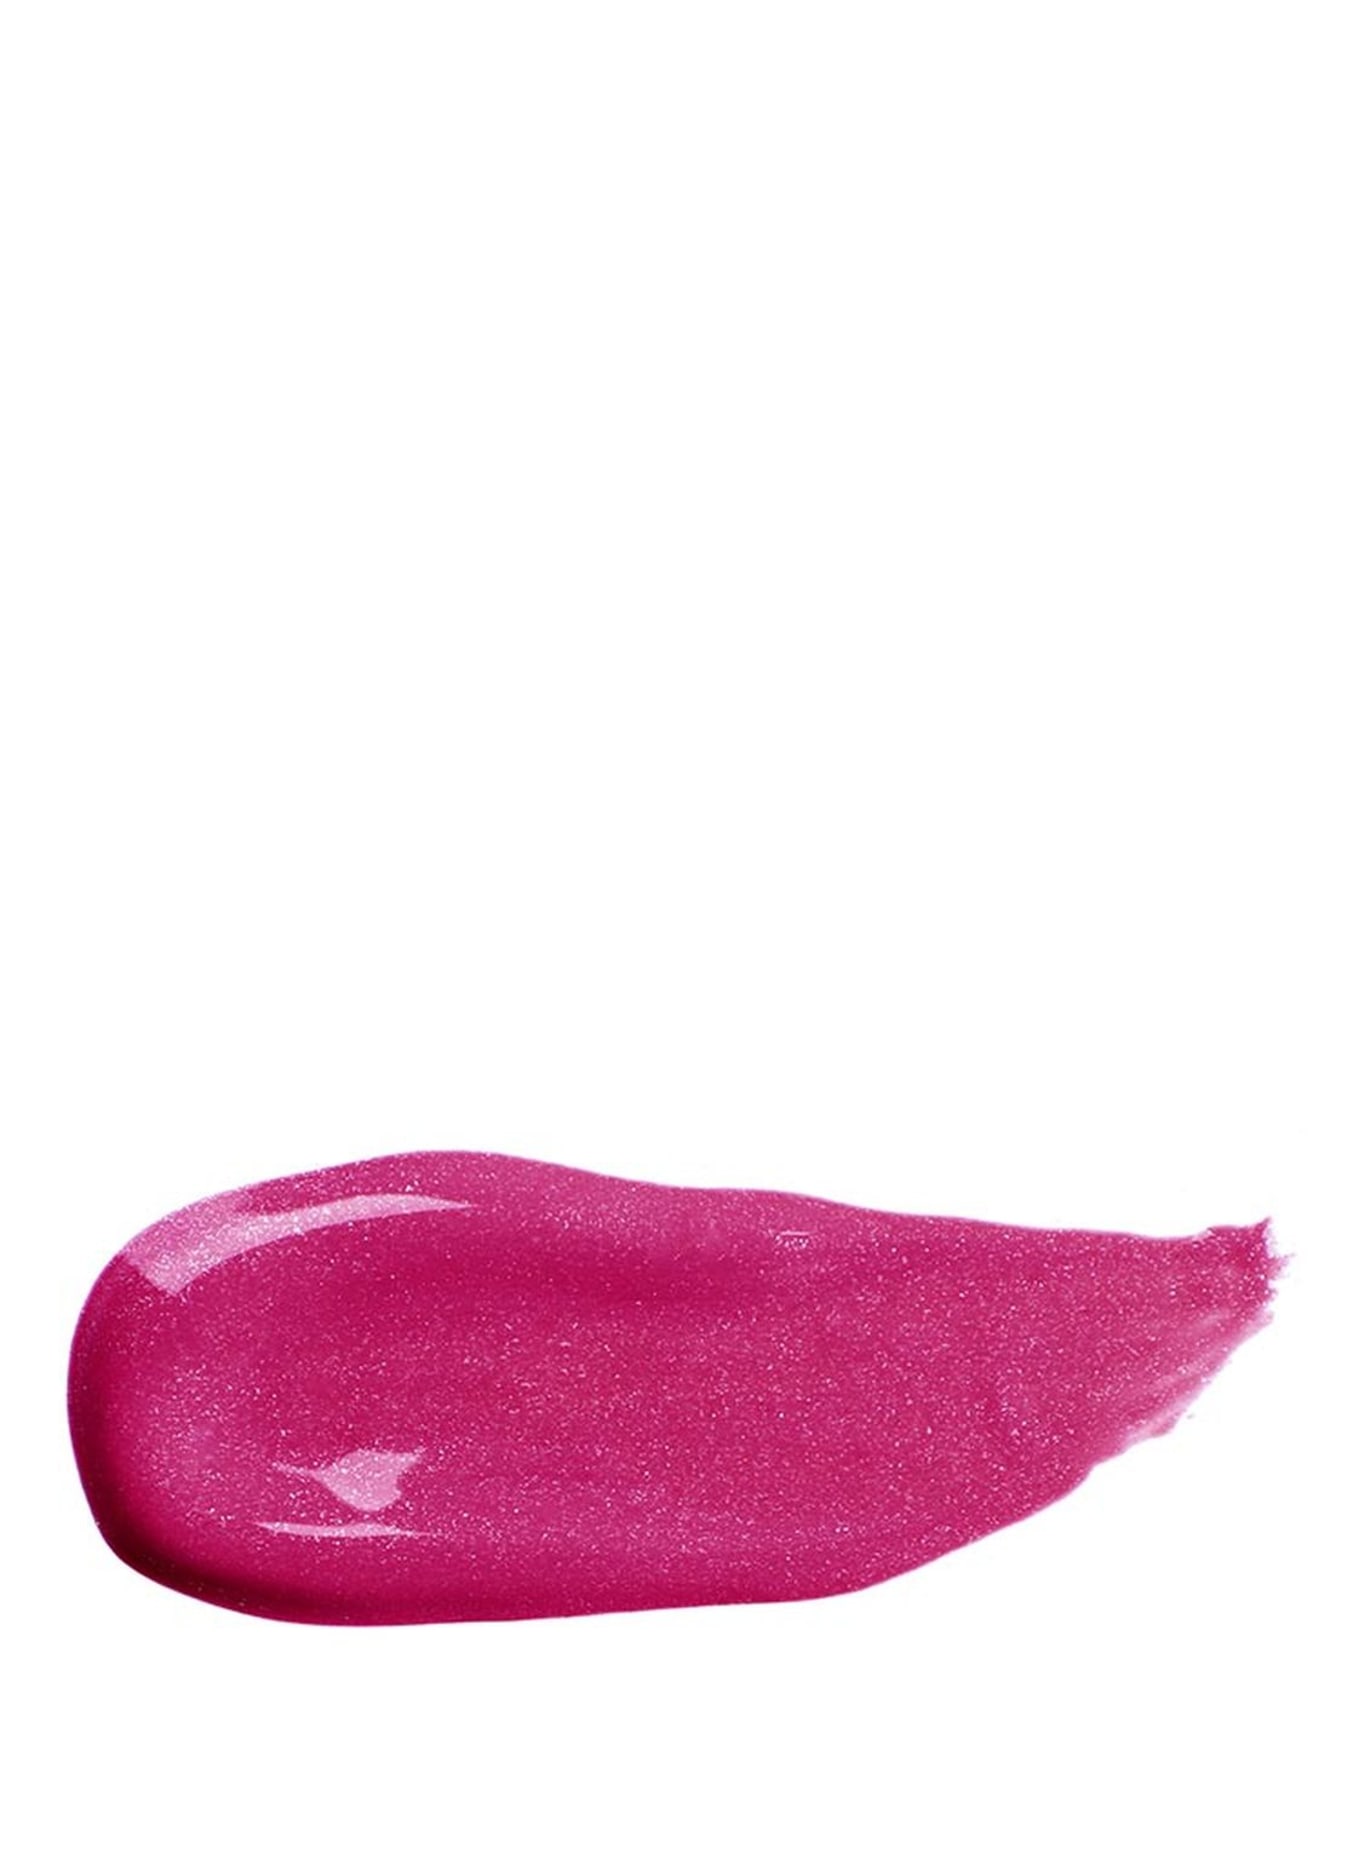 UND GRETEL KNUTZEN SHIMMER, Farbe: Rasberry Shimmer 06 (Bild 2)